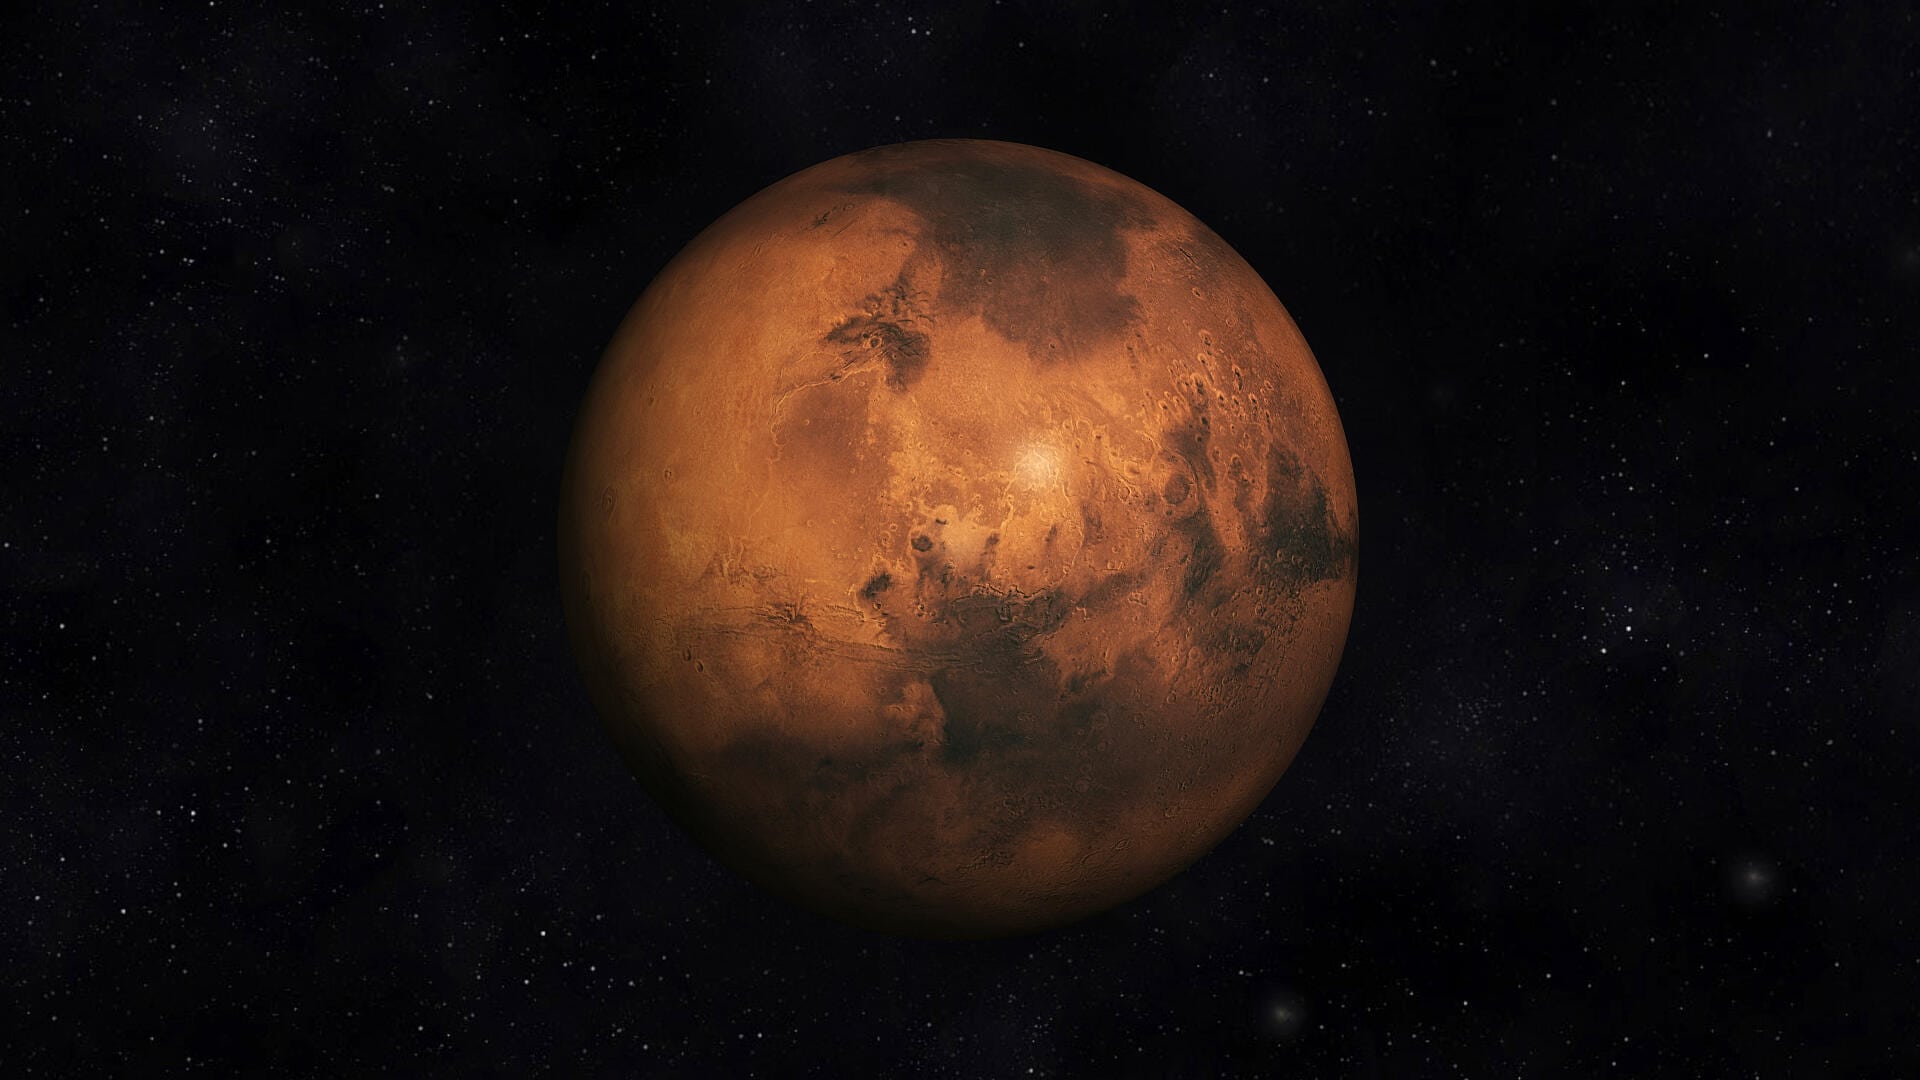 Space probe "Hope": Hope has reached Mars